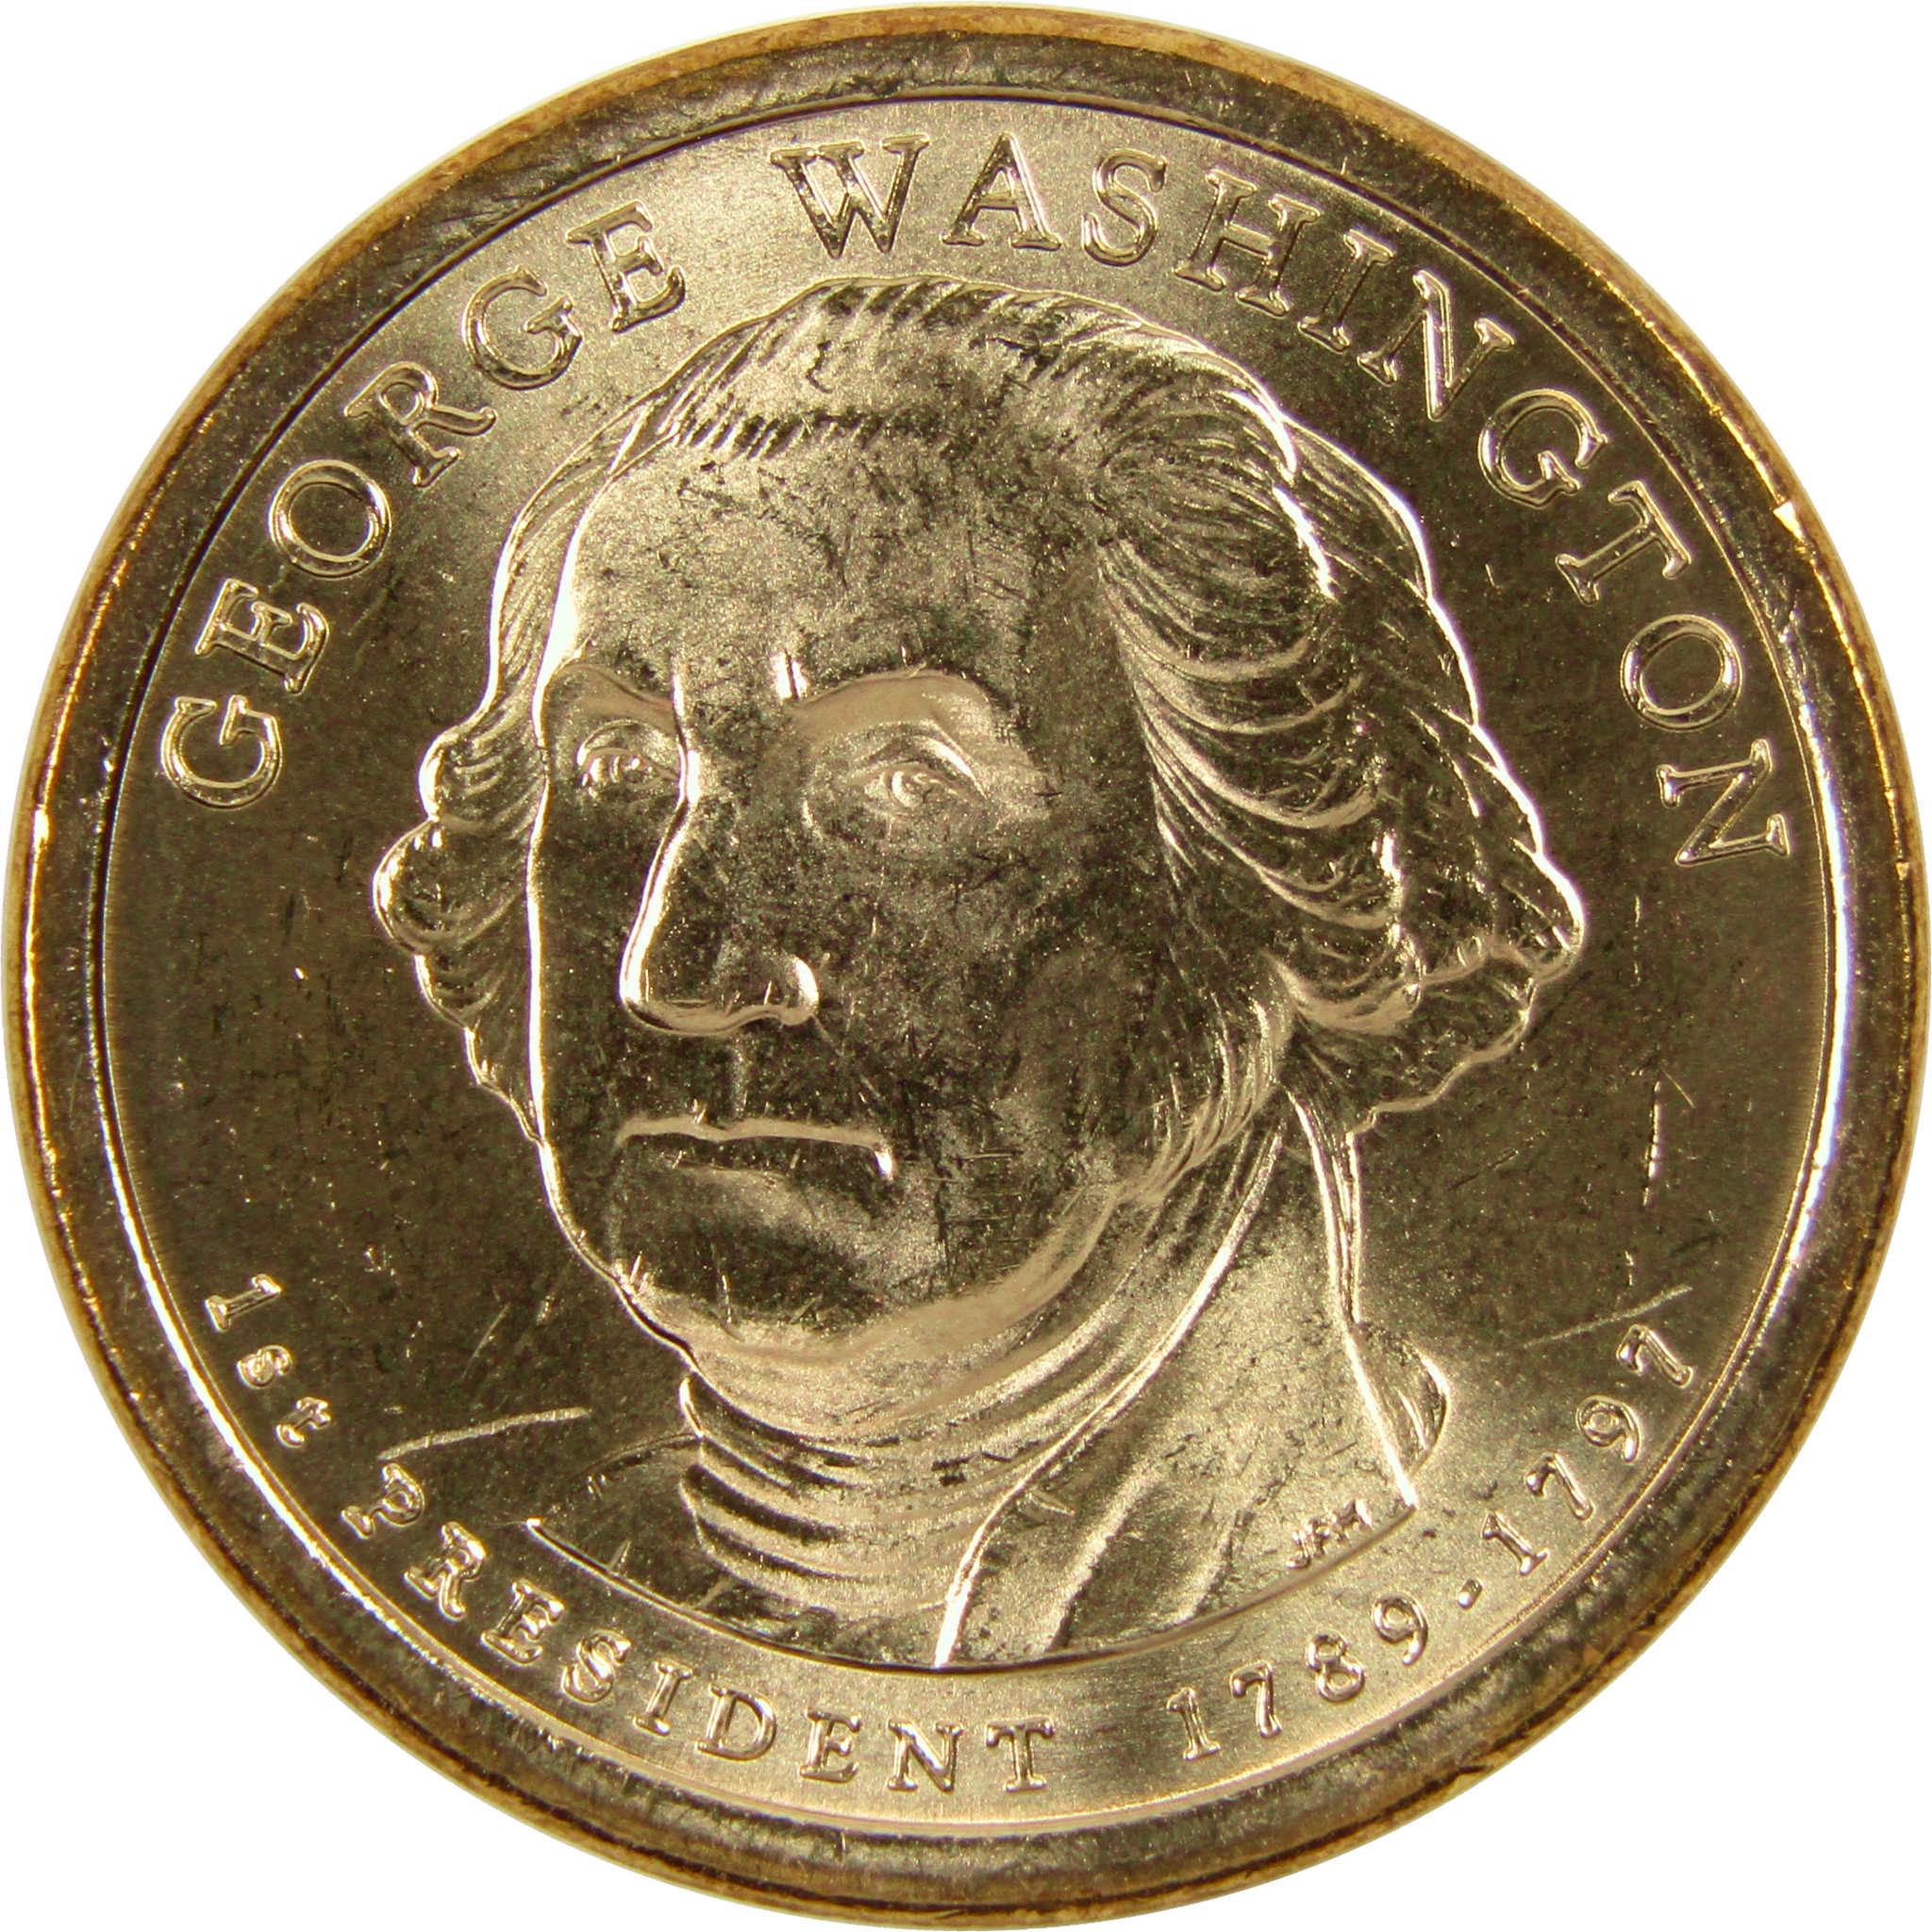 2007 P George Washington Presidential Dollar BU Uncirculated $1 Coin